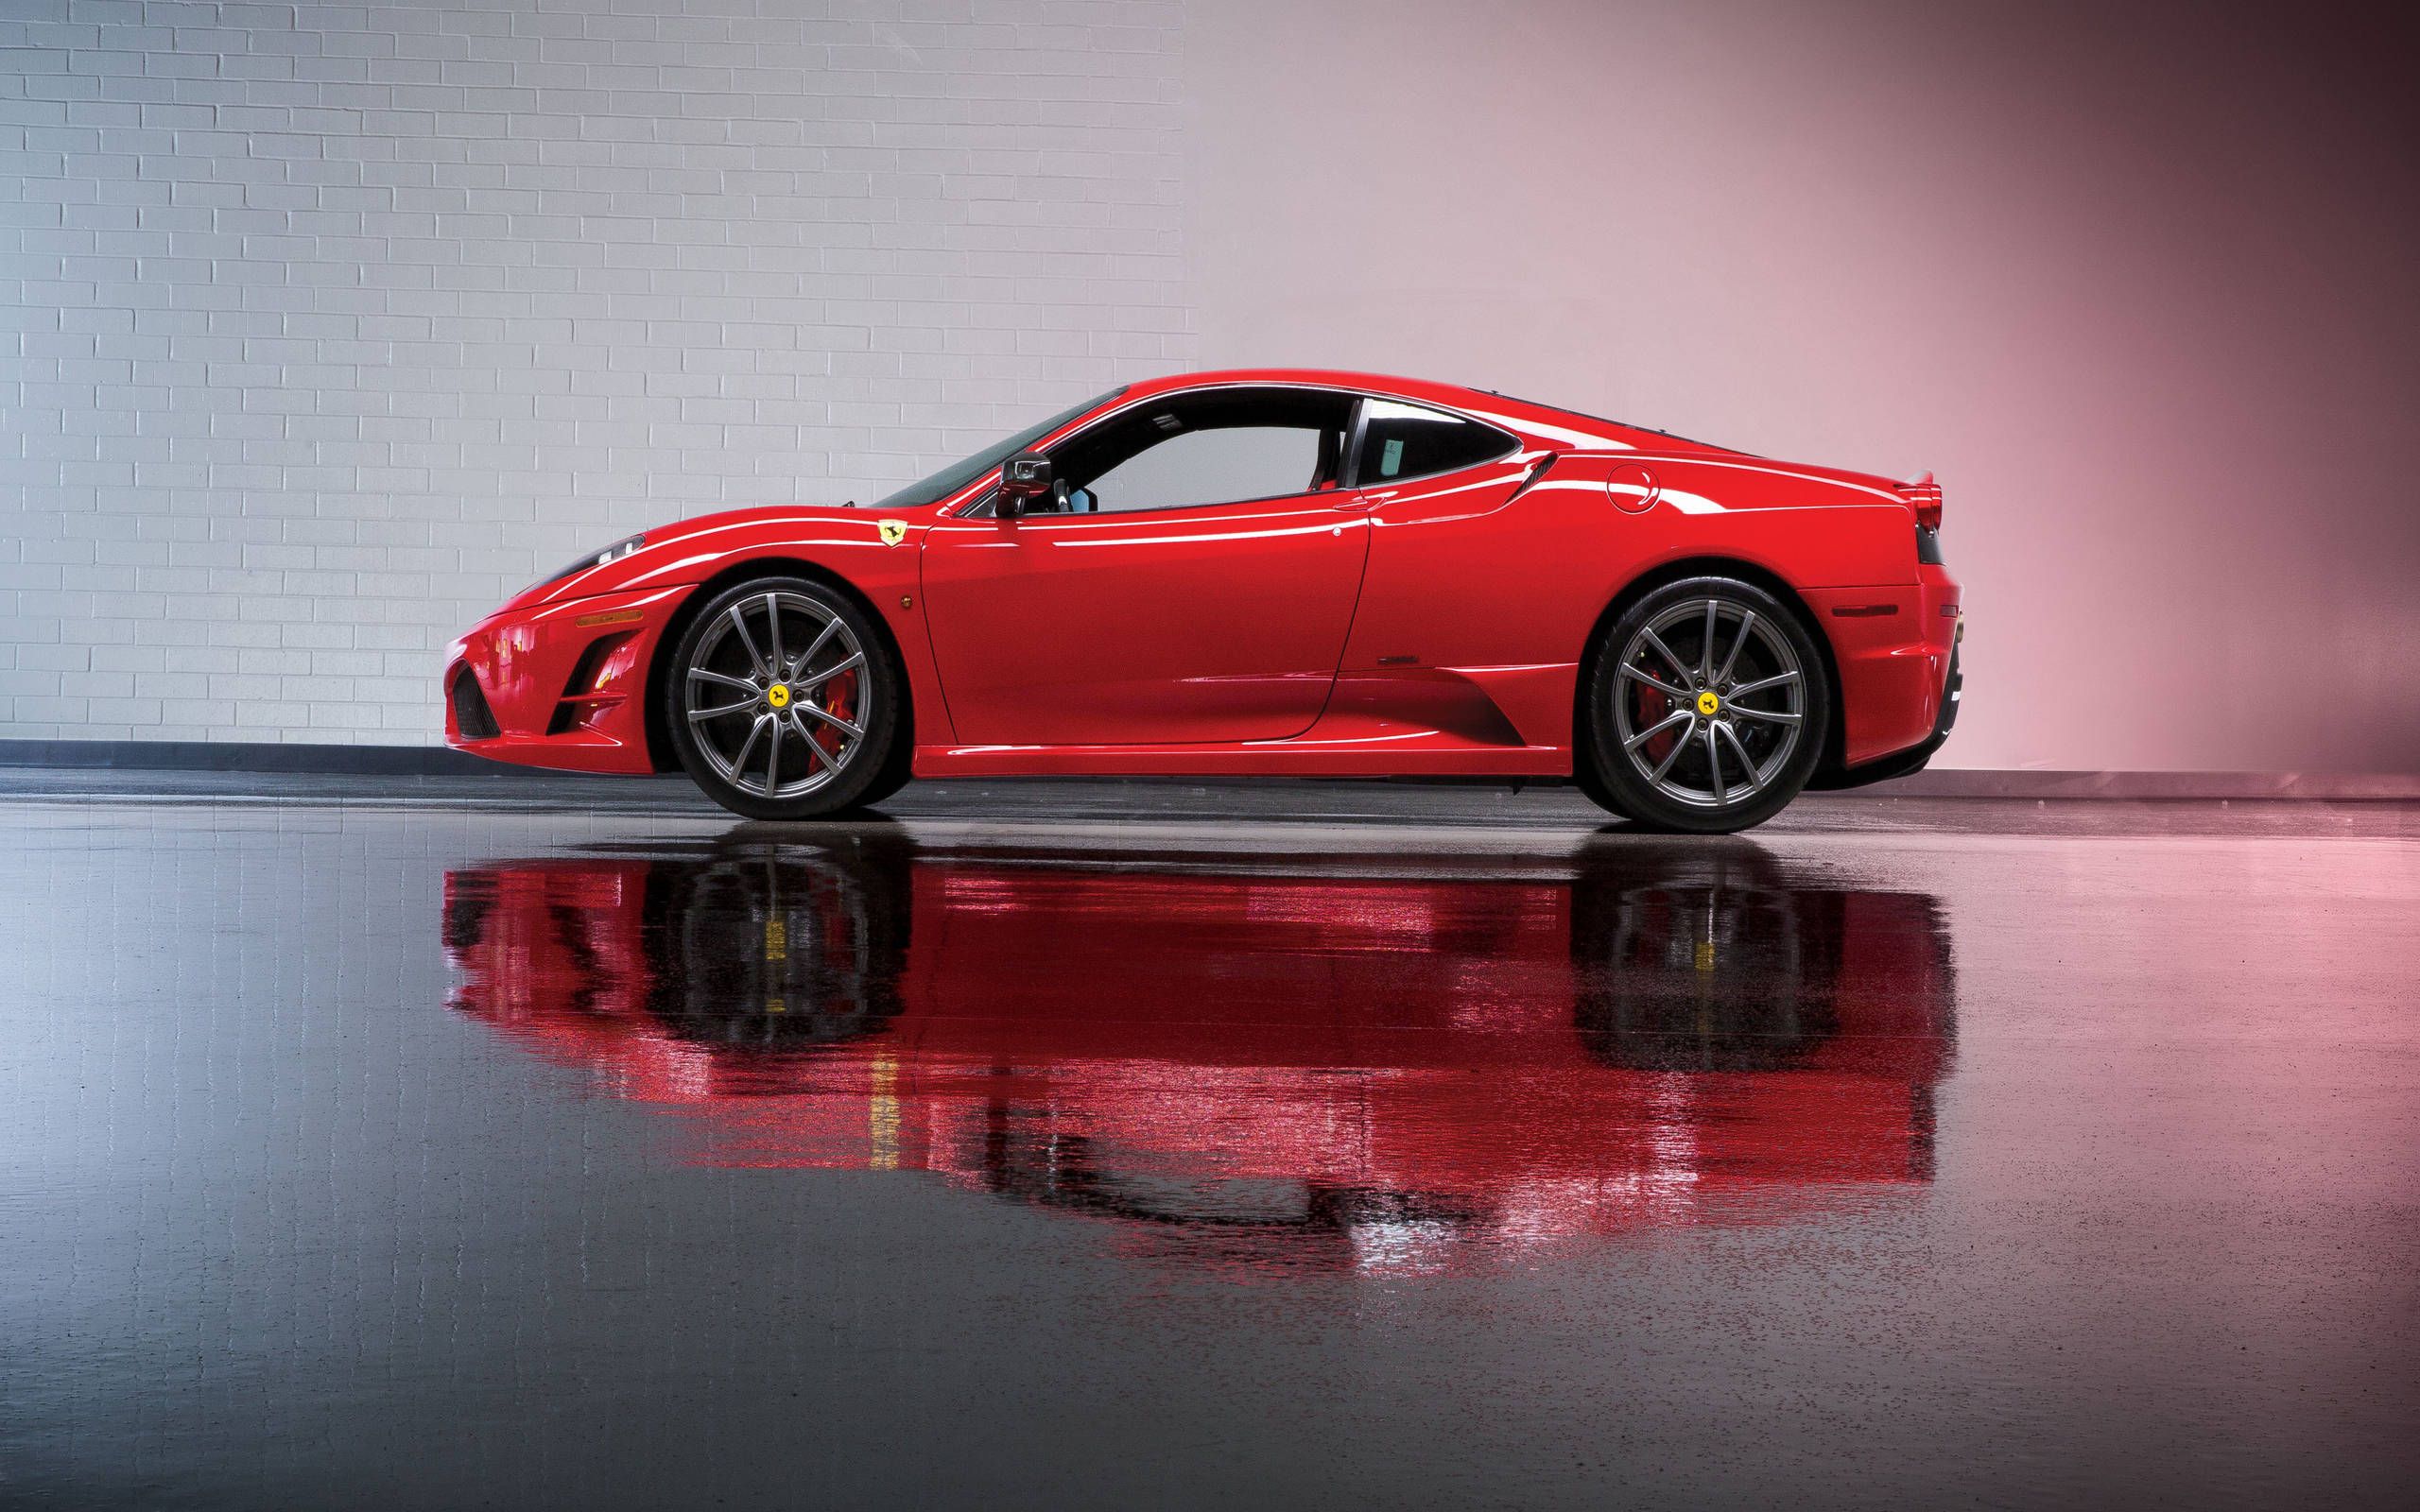 15-Year-Old “Money Kicks” Wrapped a Ferrari in a Custom Supreme x